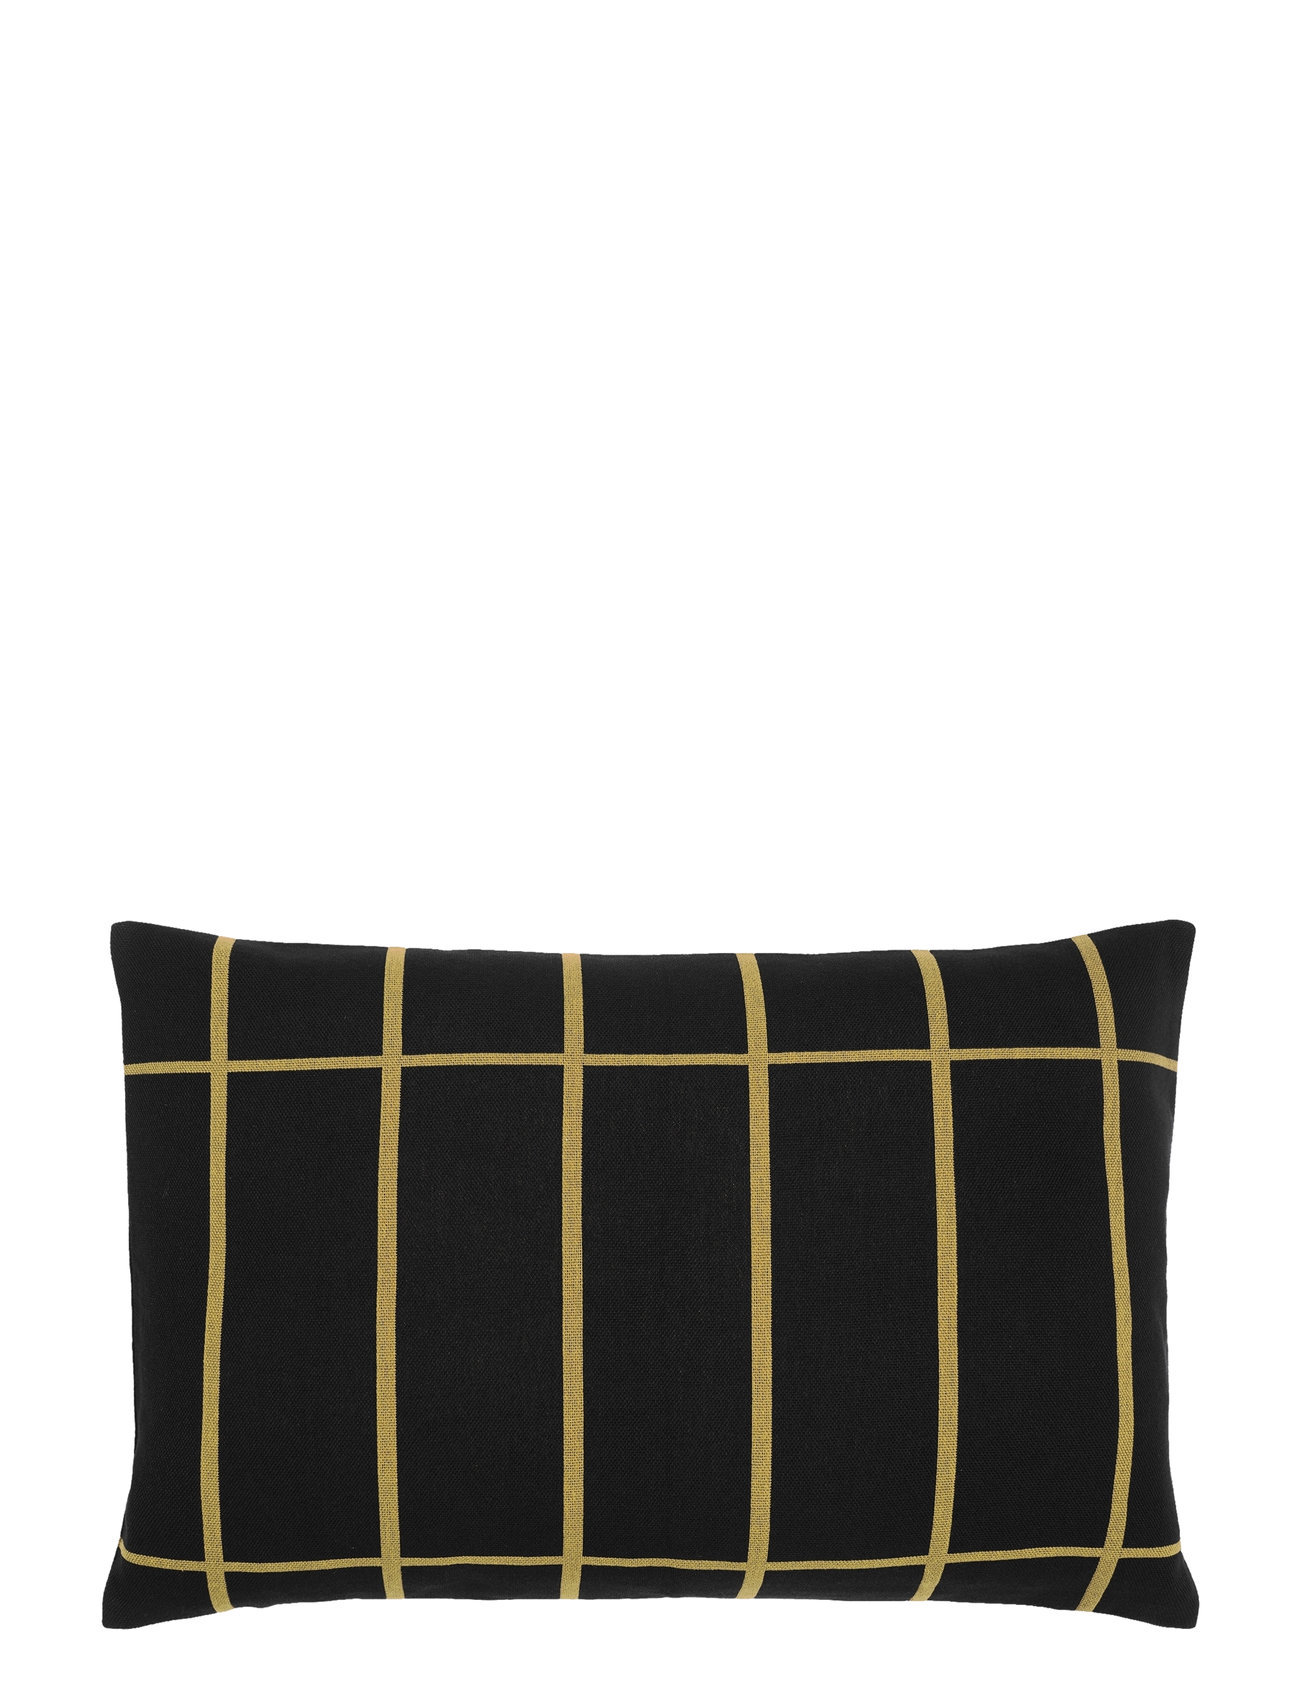 Tiiliskivi Cushion Cover 40X60 Home Textiles Cushions & Blankets Cushion Covers Black Marimekko Home